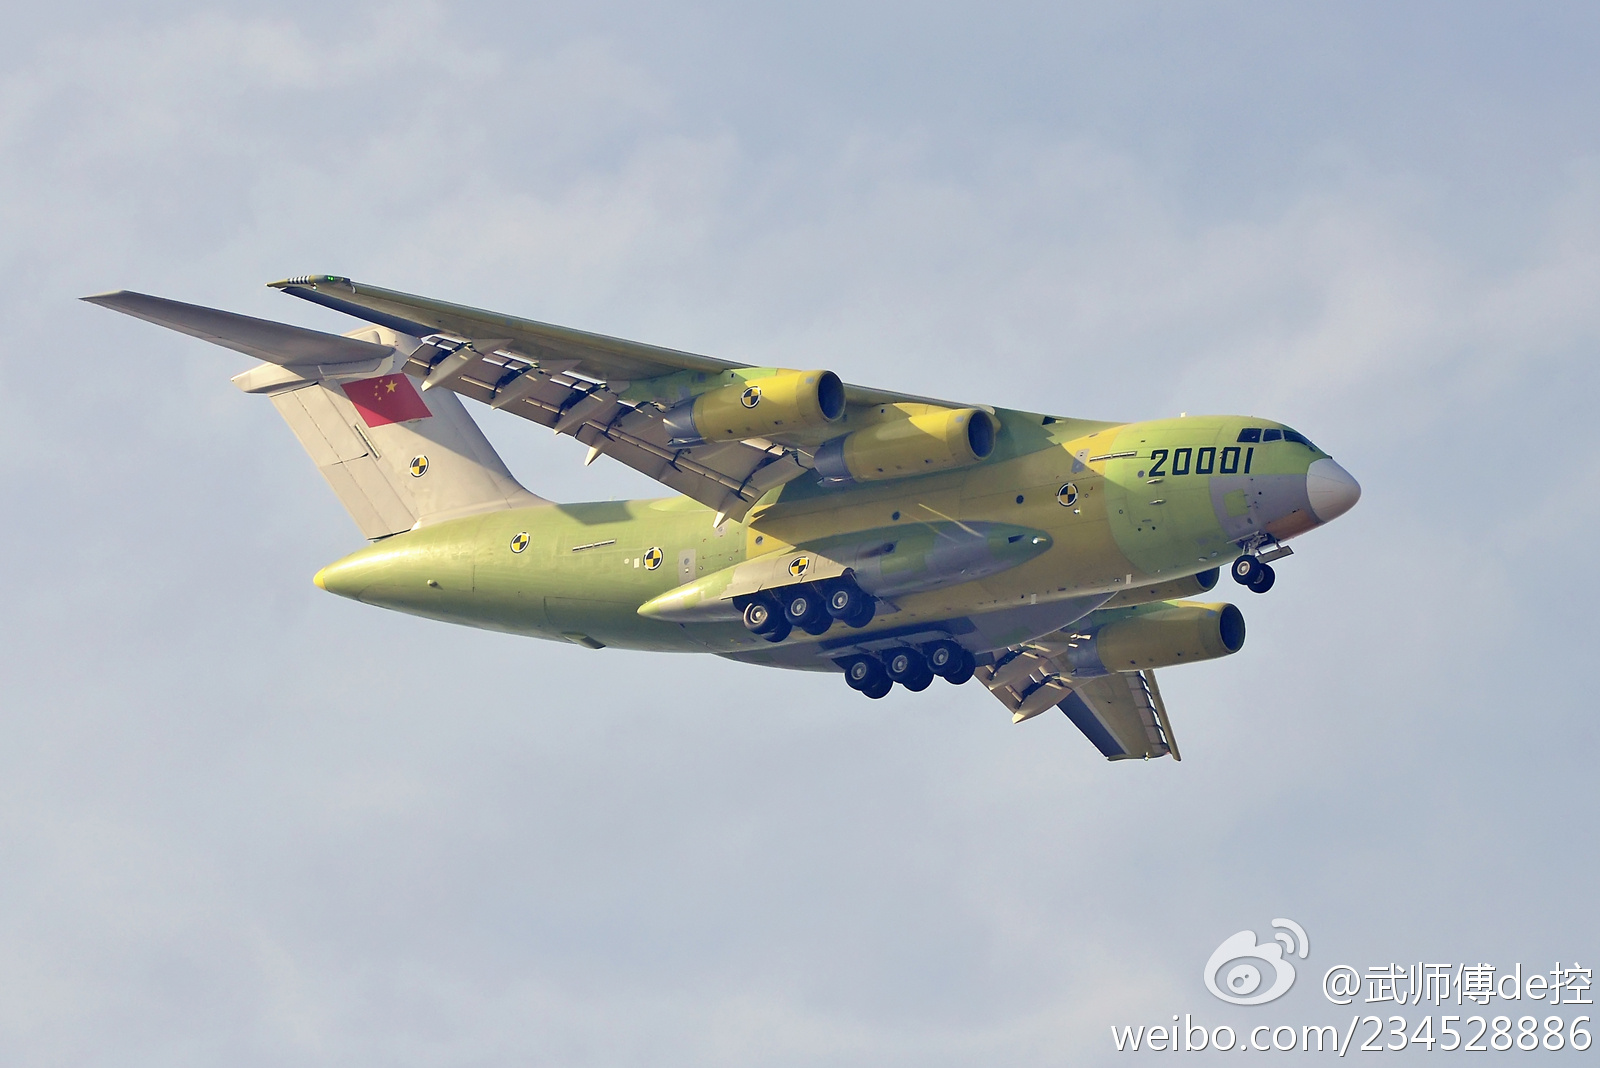 S y 20. Y-20 военно-транспортный самолёт. Y-20 самолет Китай. Юнь-20. Xian y-20 транспортный самолёт.